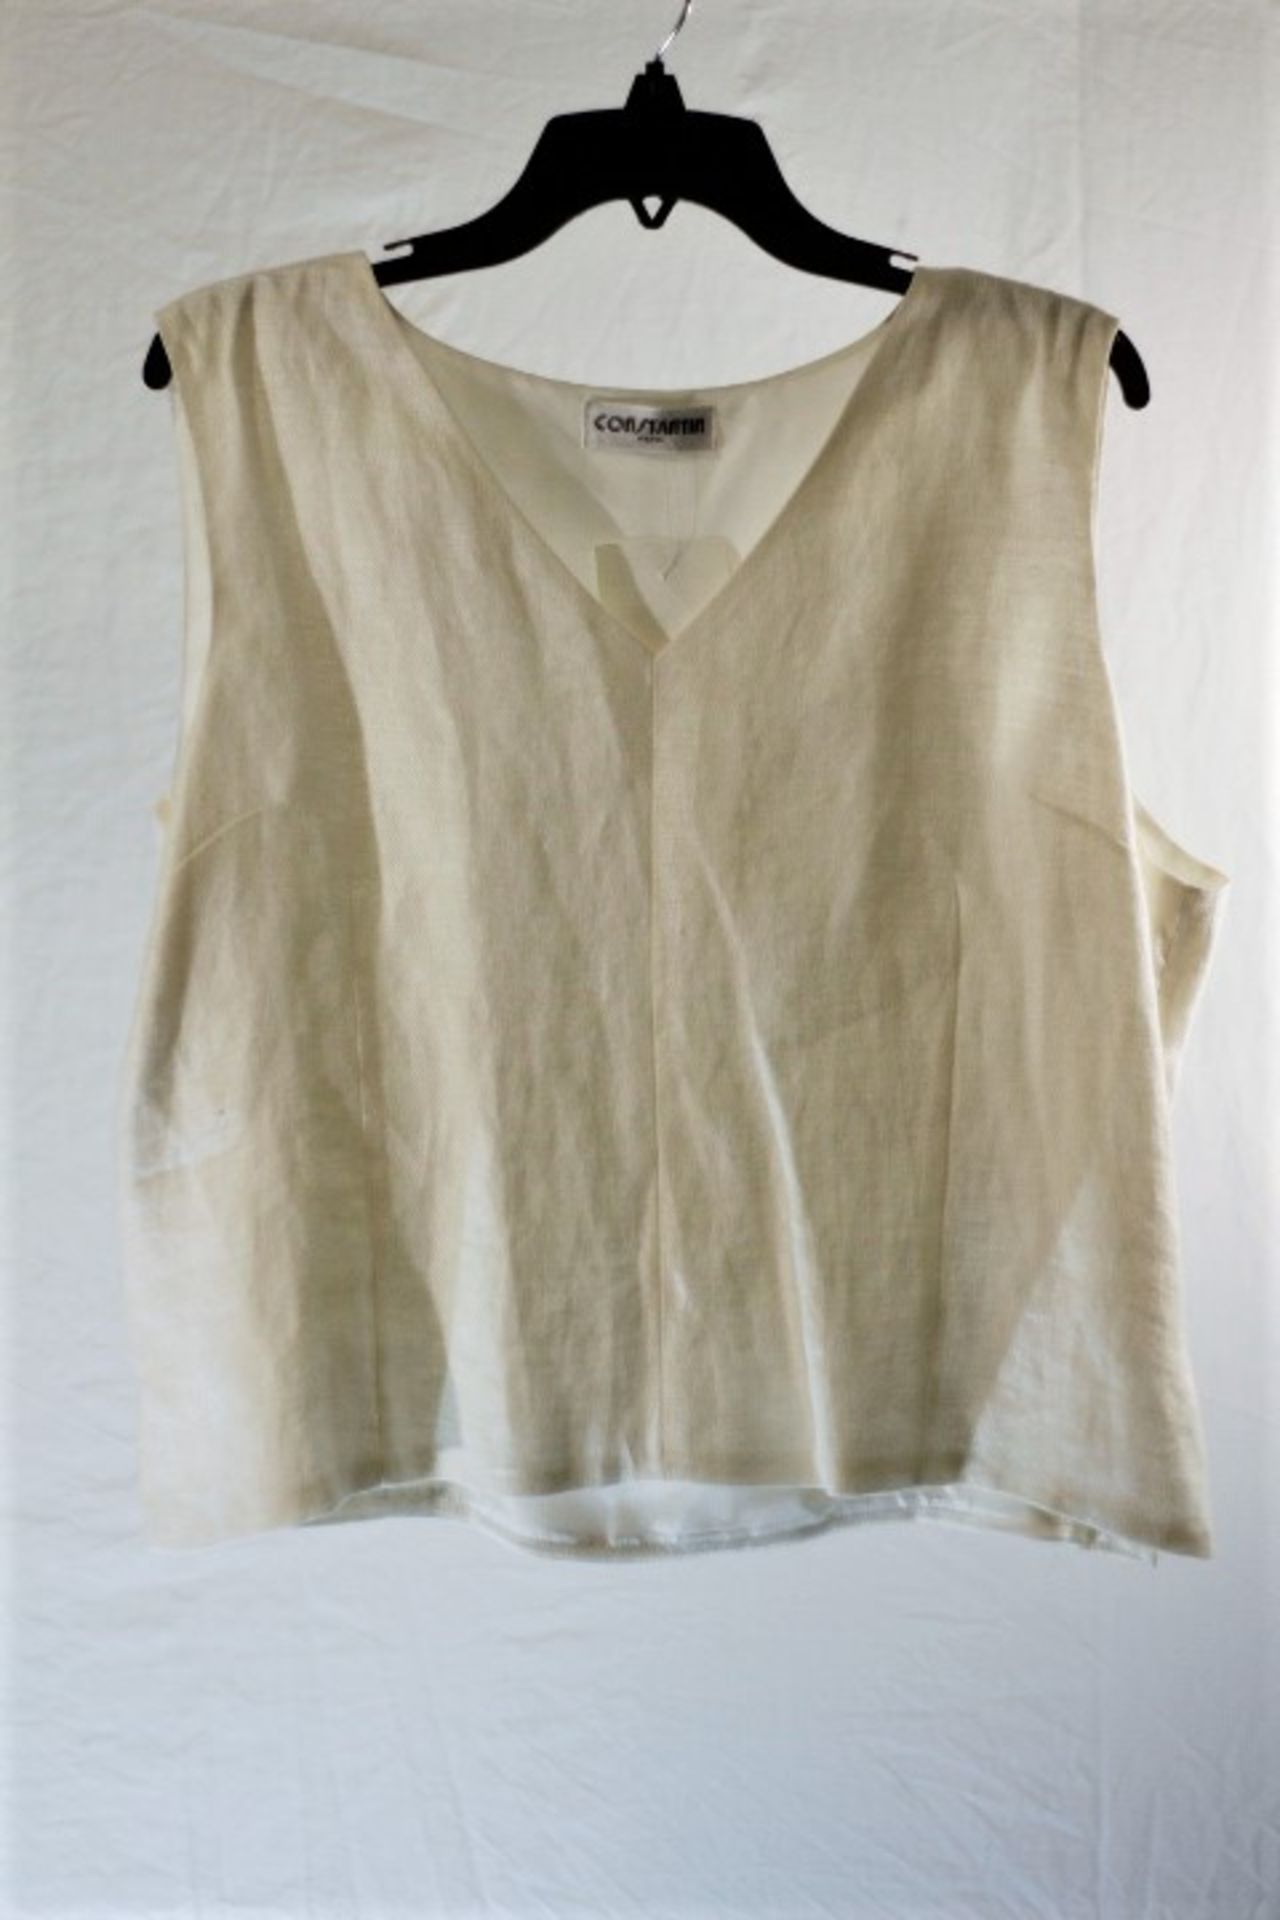 1 x Constantin Paris White Top - Size: 24 - Material: Acetate, Acrylic, Cotton, Fibre, Polyester, - Image 7 of 8